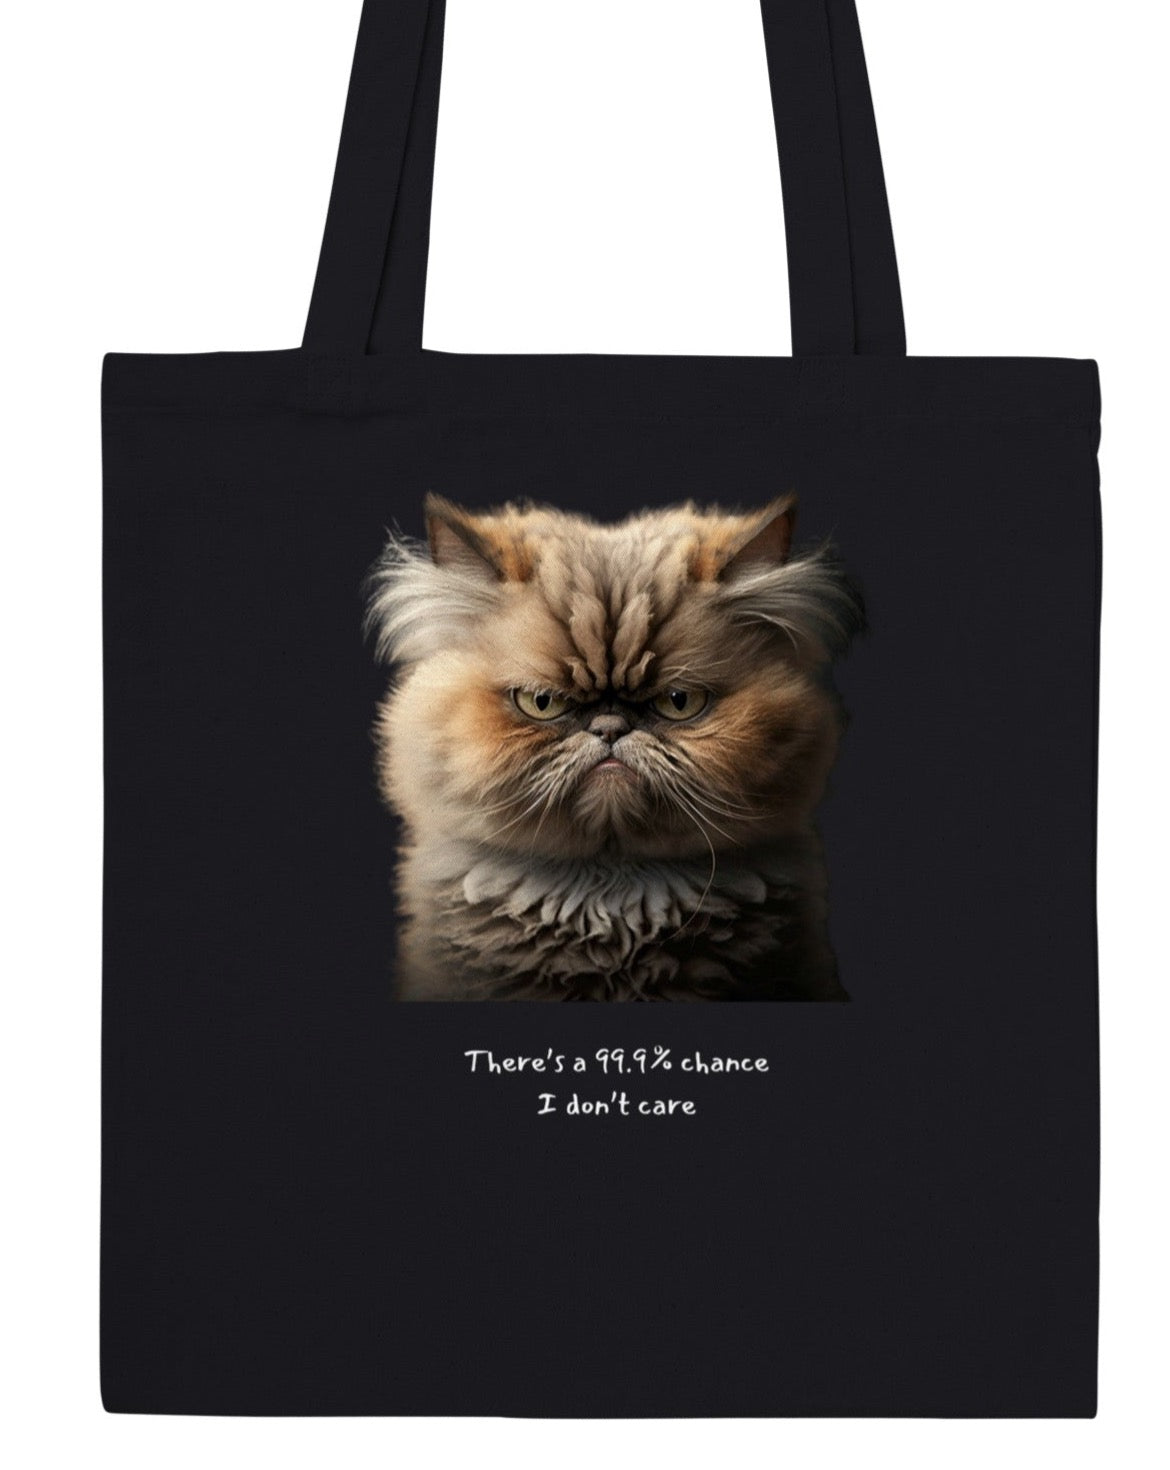 Funny ginger cat tote bag